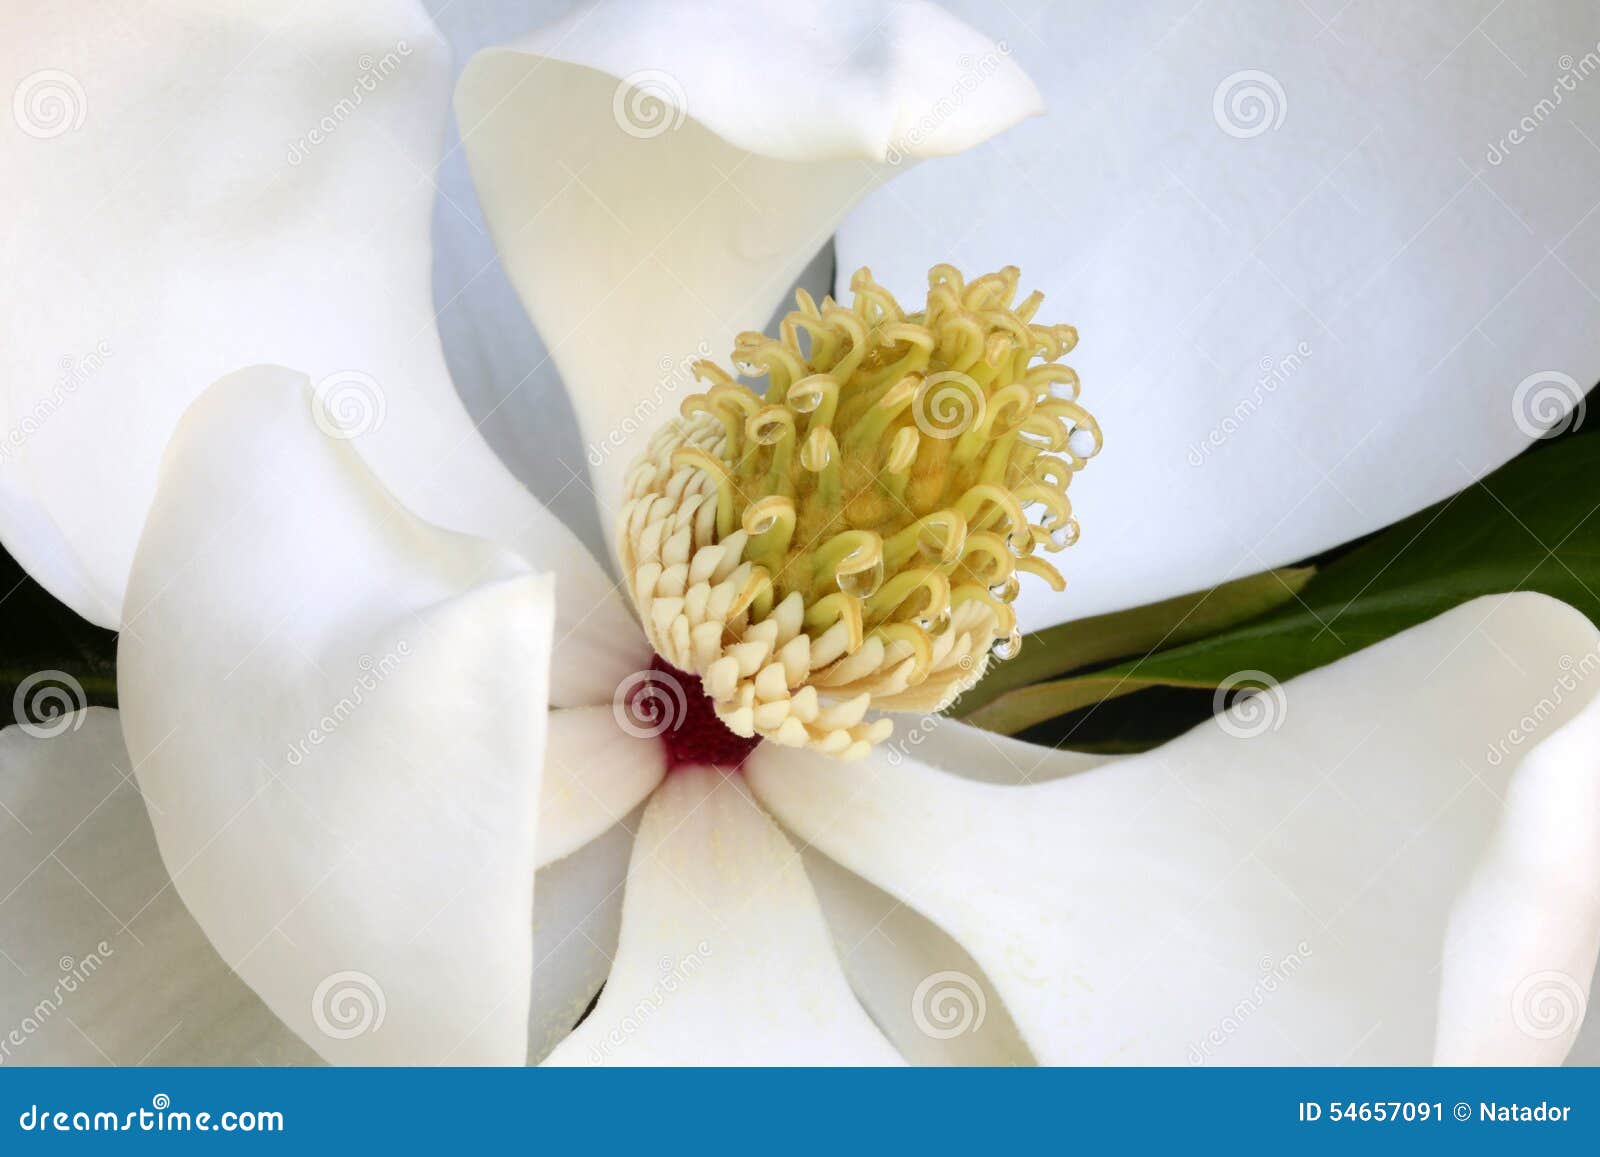 white magnolia flower with nectar drops, macro